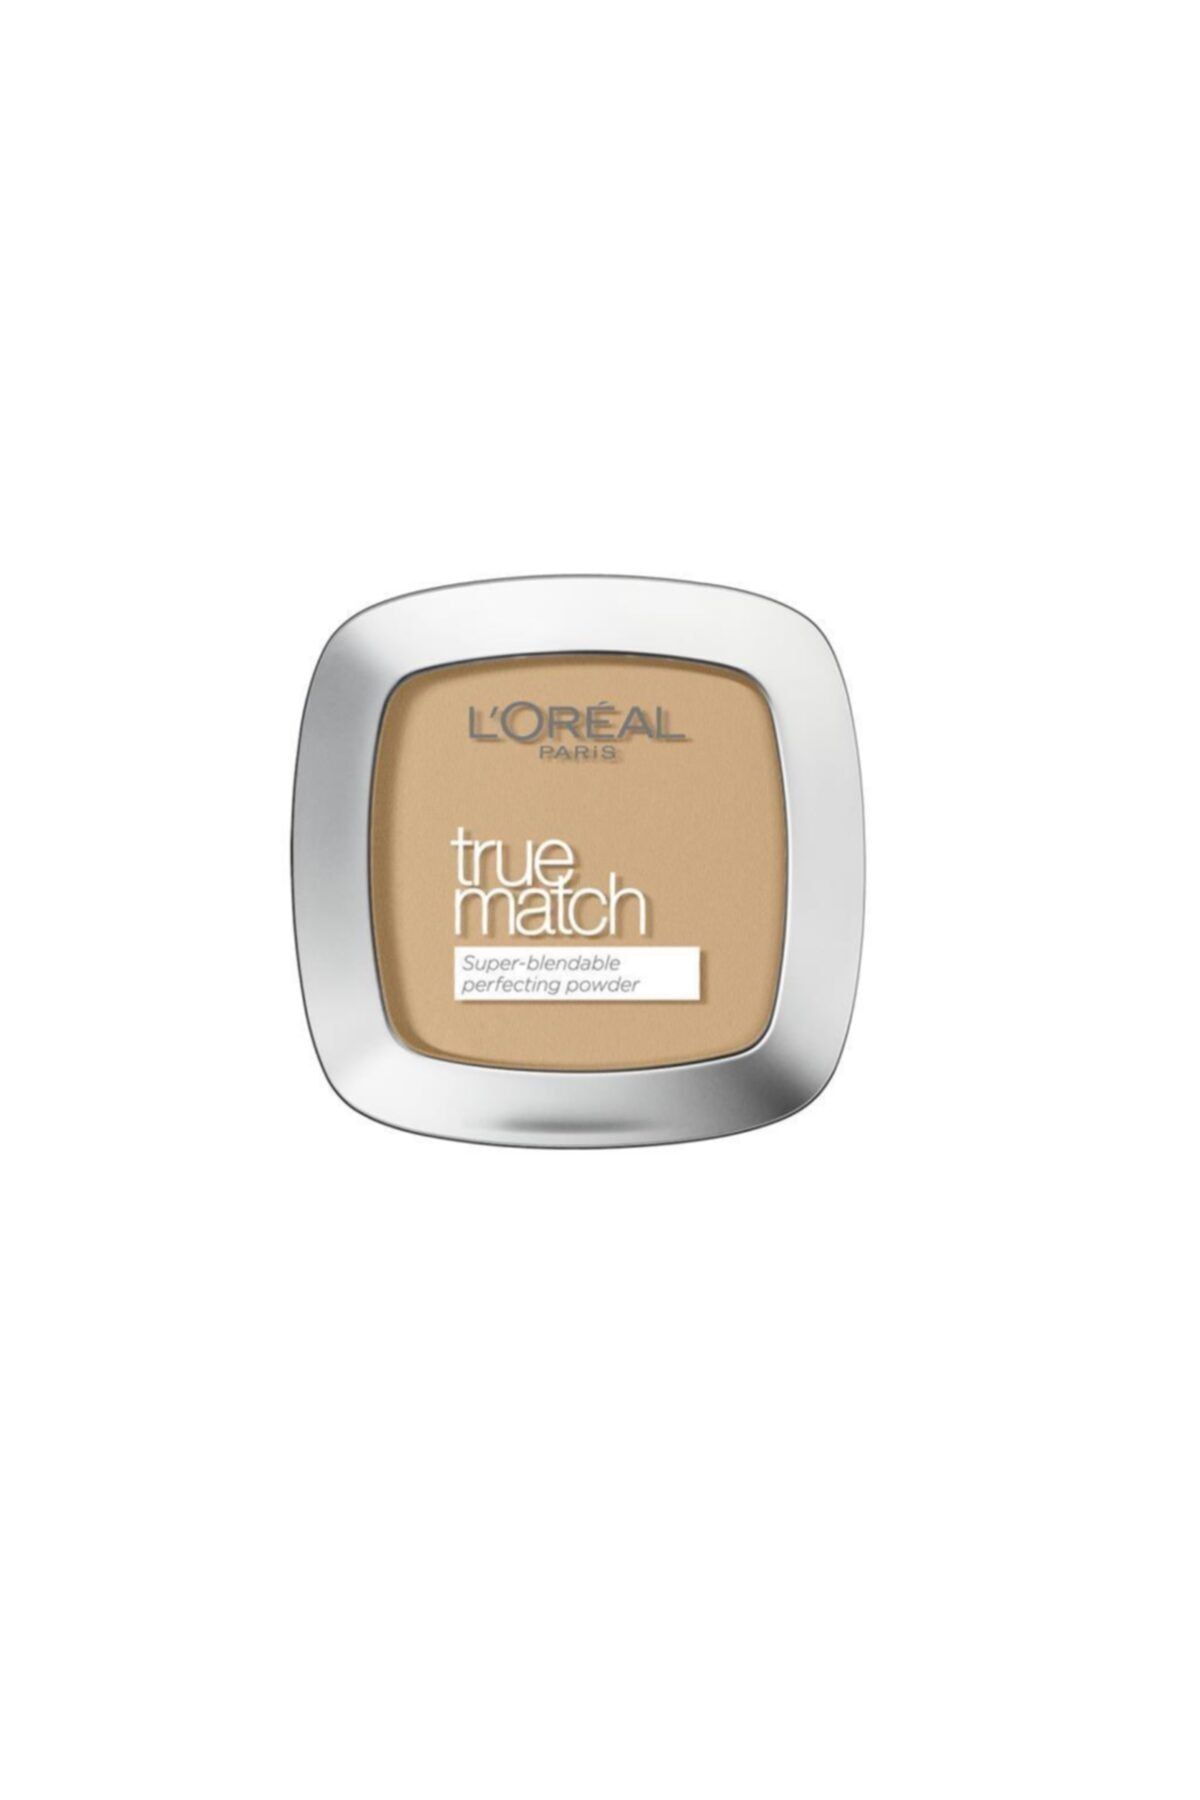 L'Oreal Paris پودر مات و مخملی True Match Prestige نمایی طبیعی رنگ طلایی بژ شماره D/3.W